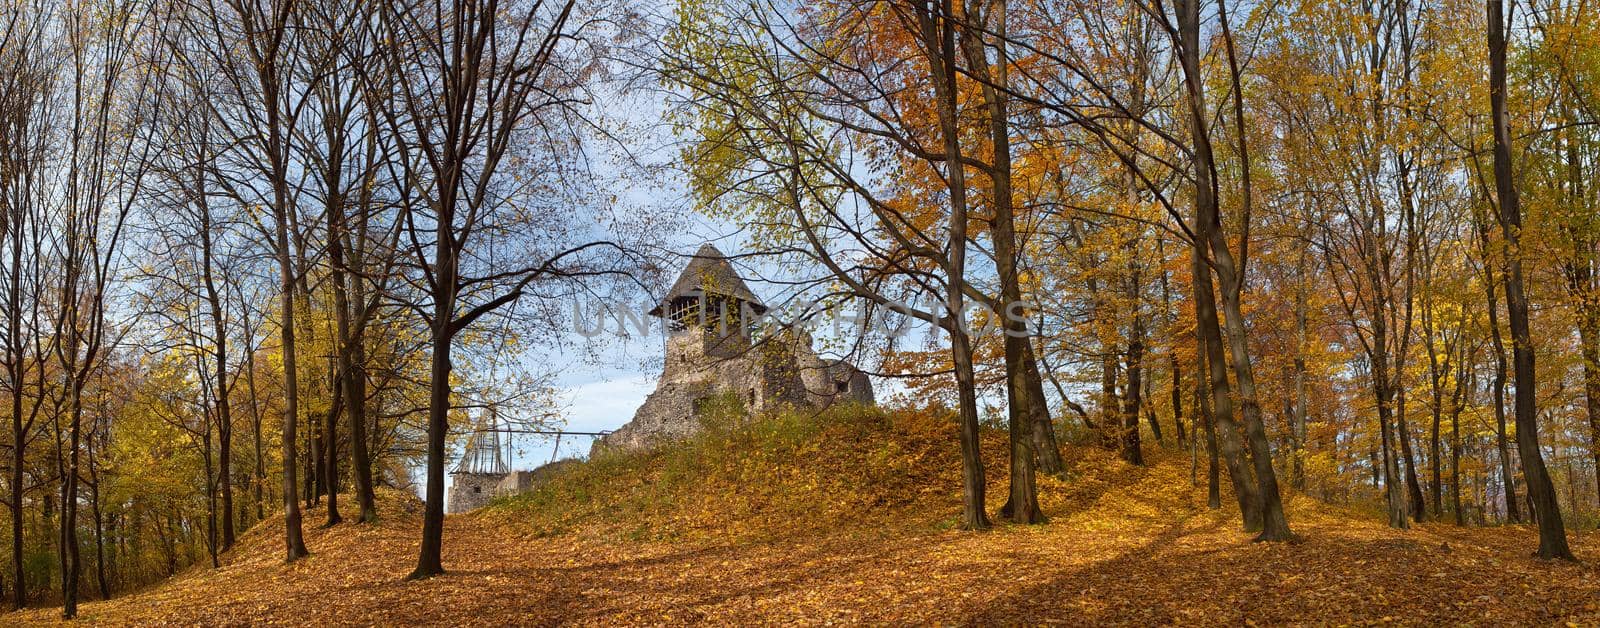 Old castle in autumn forest. Ukraine, Europe